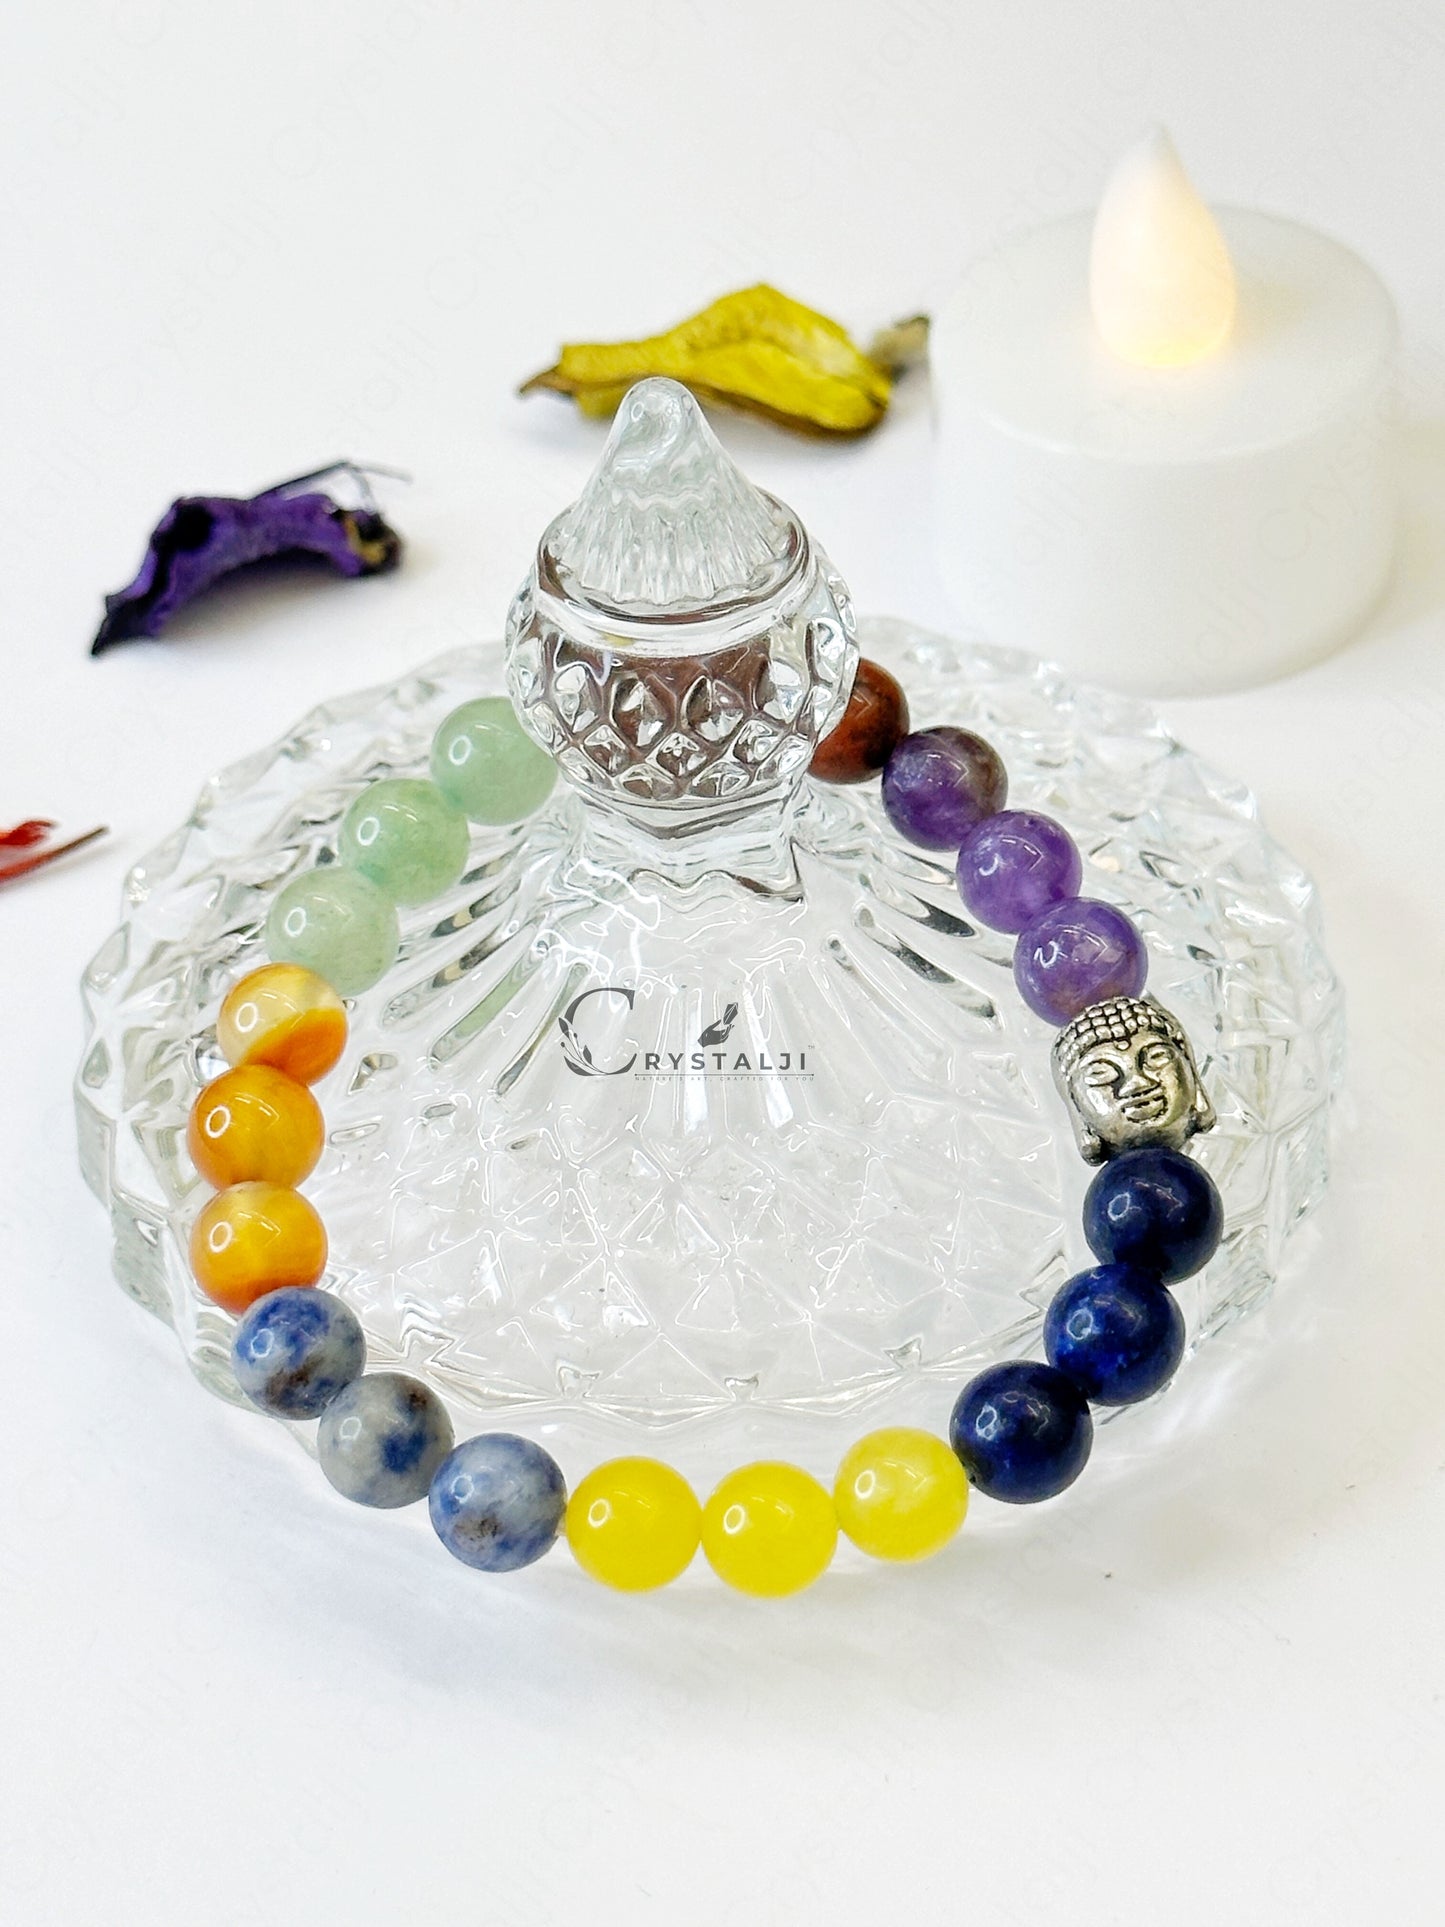 Seven Chakra Buddha Bracelet | Adjustable Bracelet | Stylish Charm Stone Bracelet for Men & Women With 8MM Beads